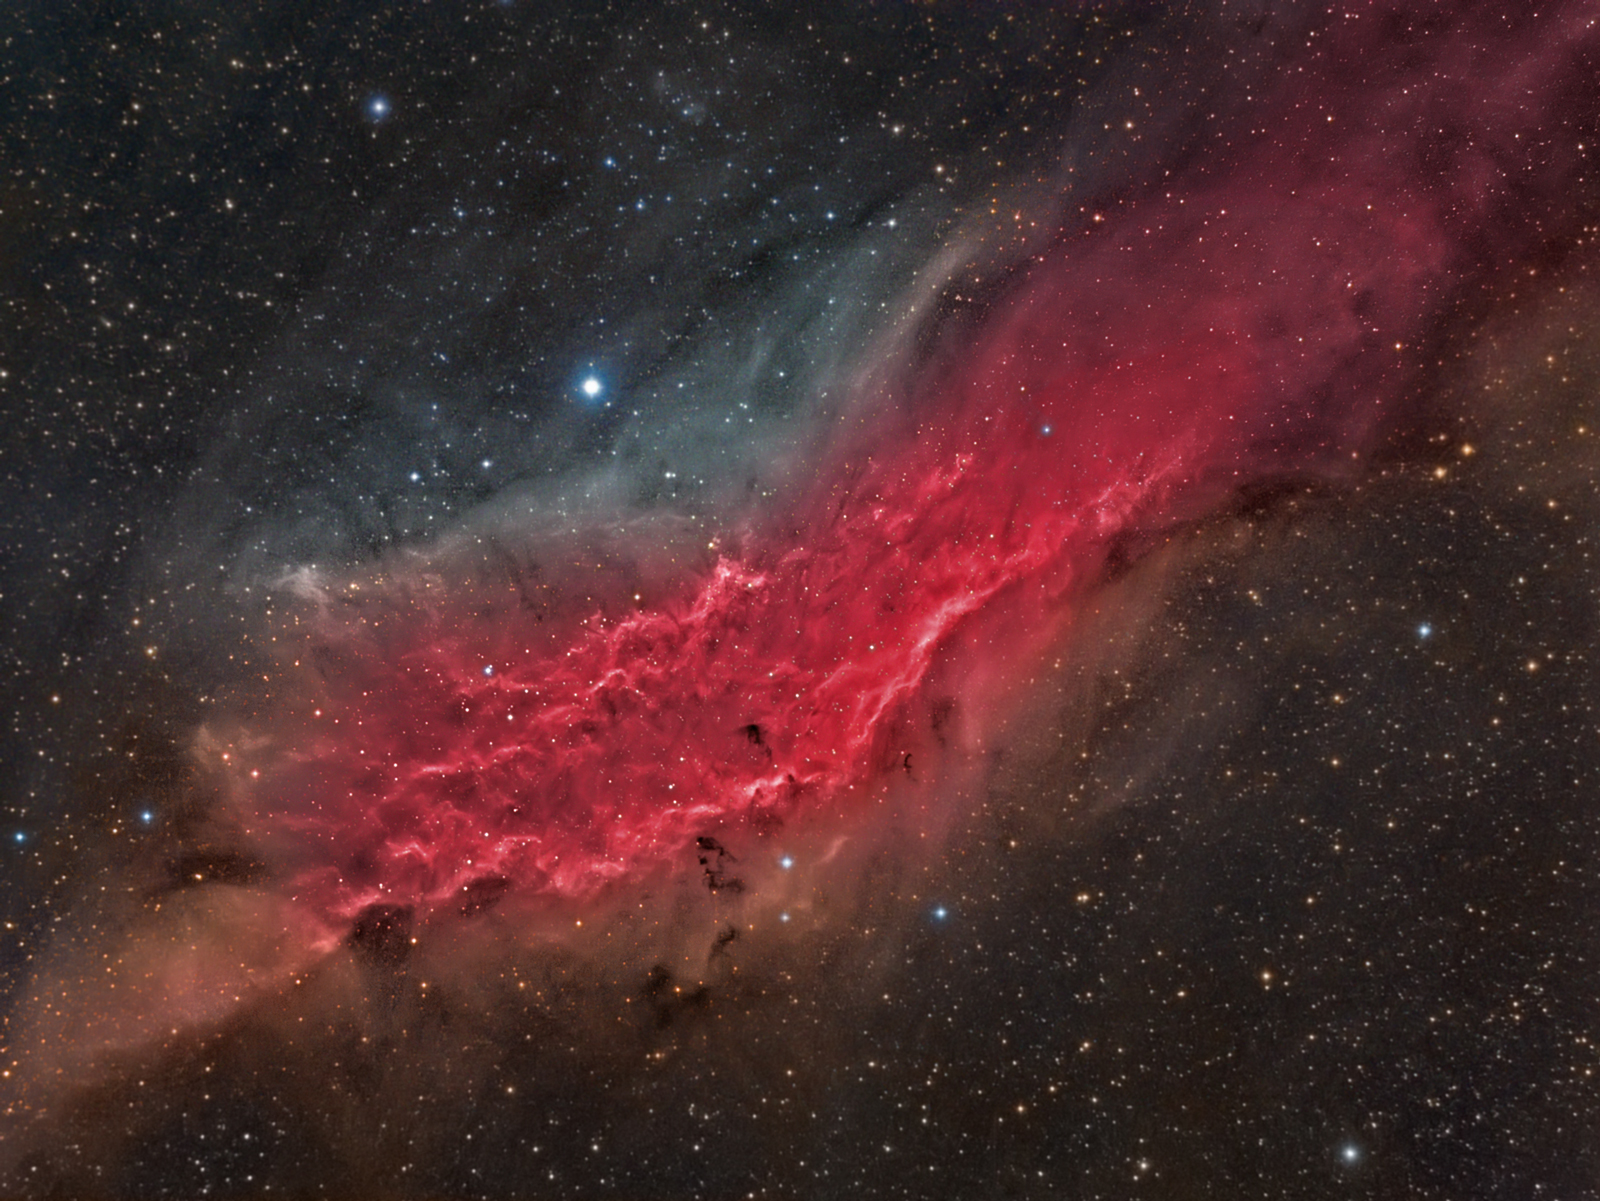 california nebula